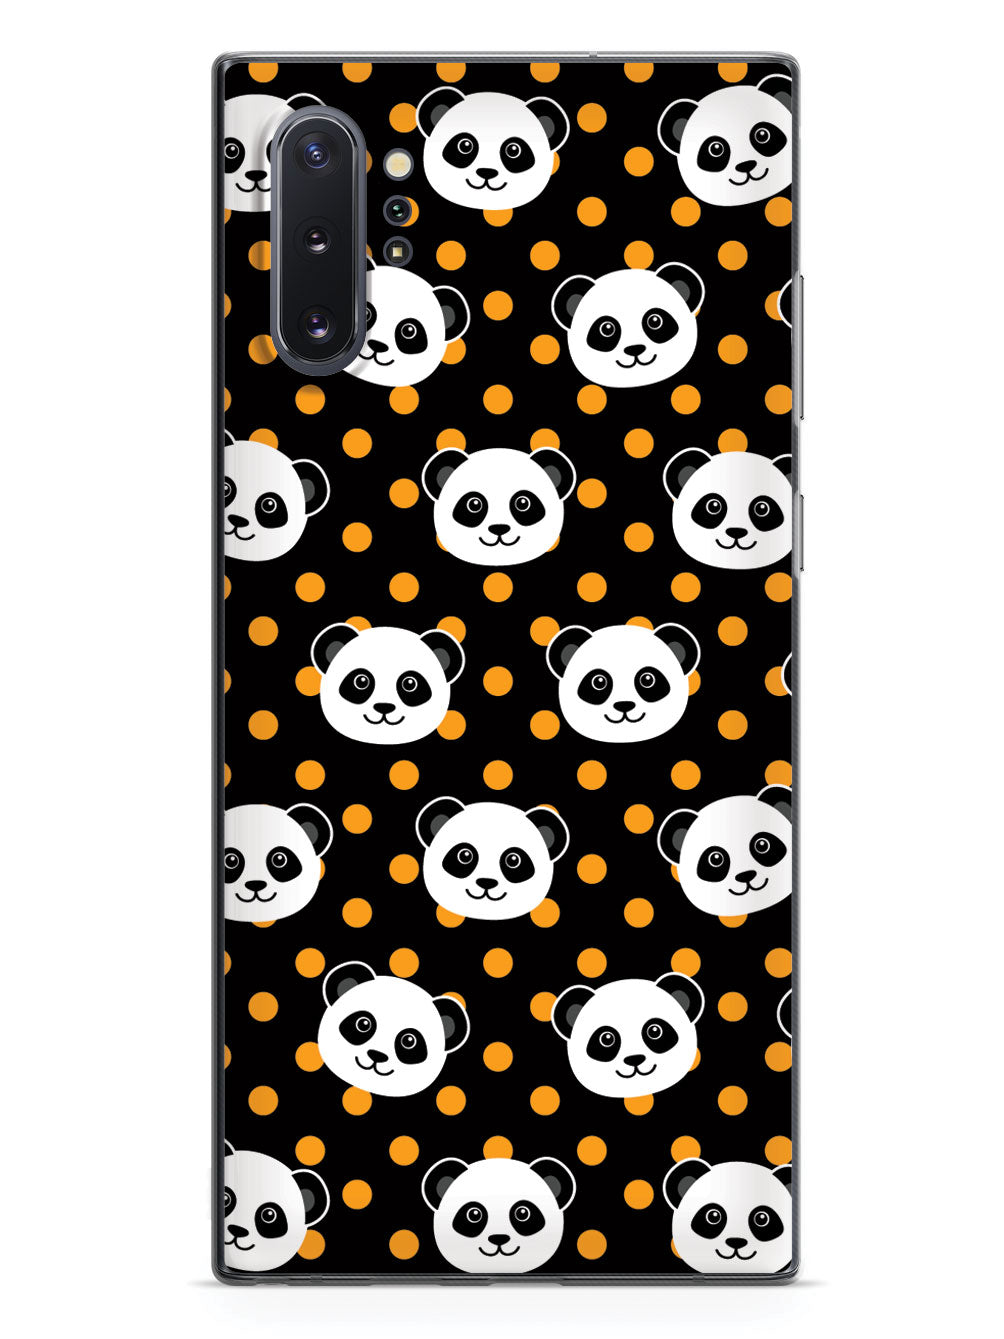 Cute Panda Pattern - Orange Polka Dots - Black Case